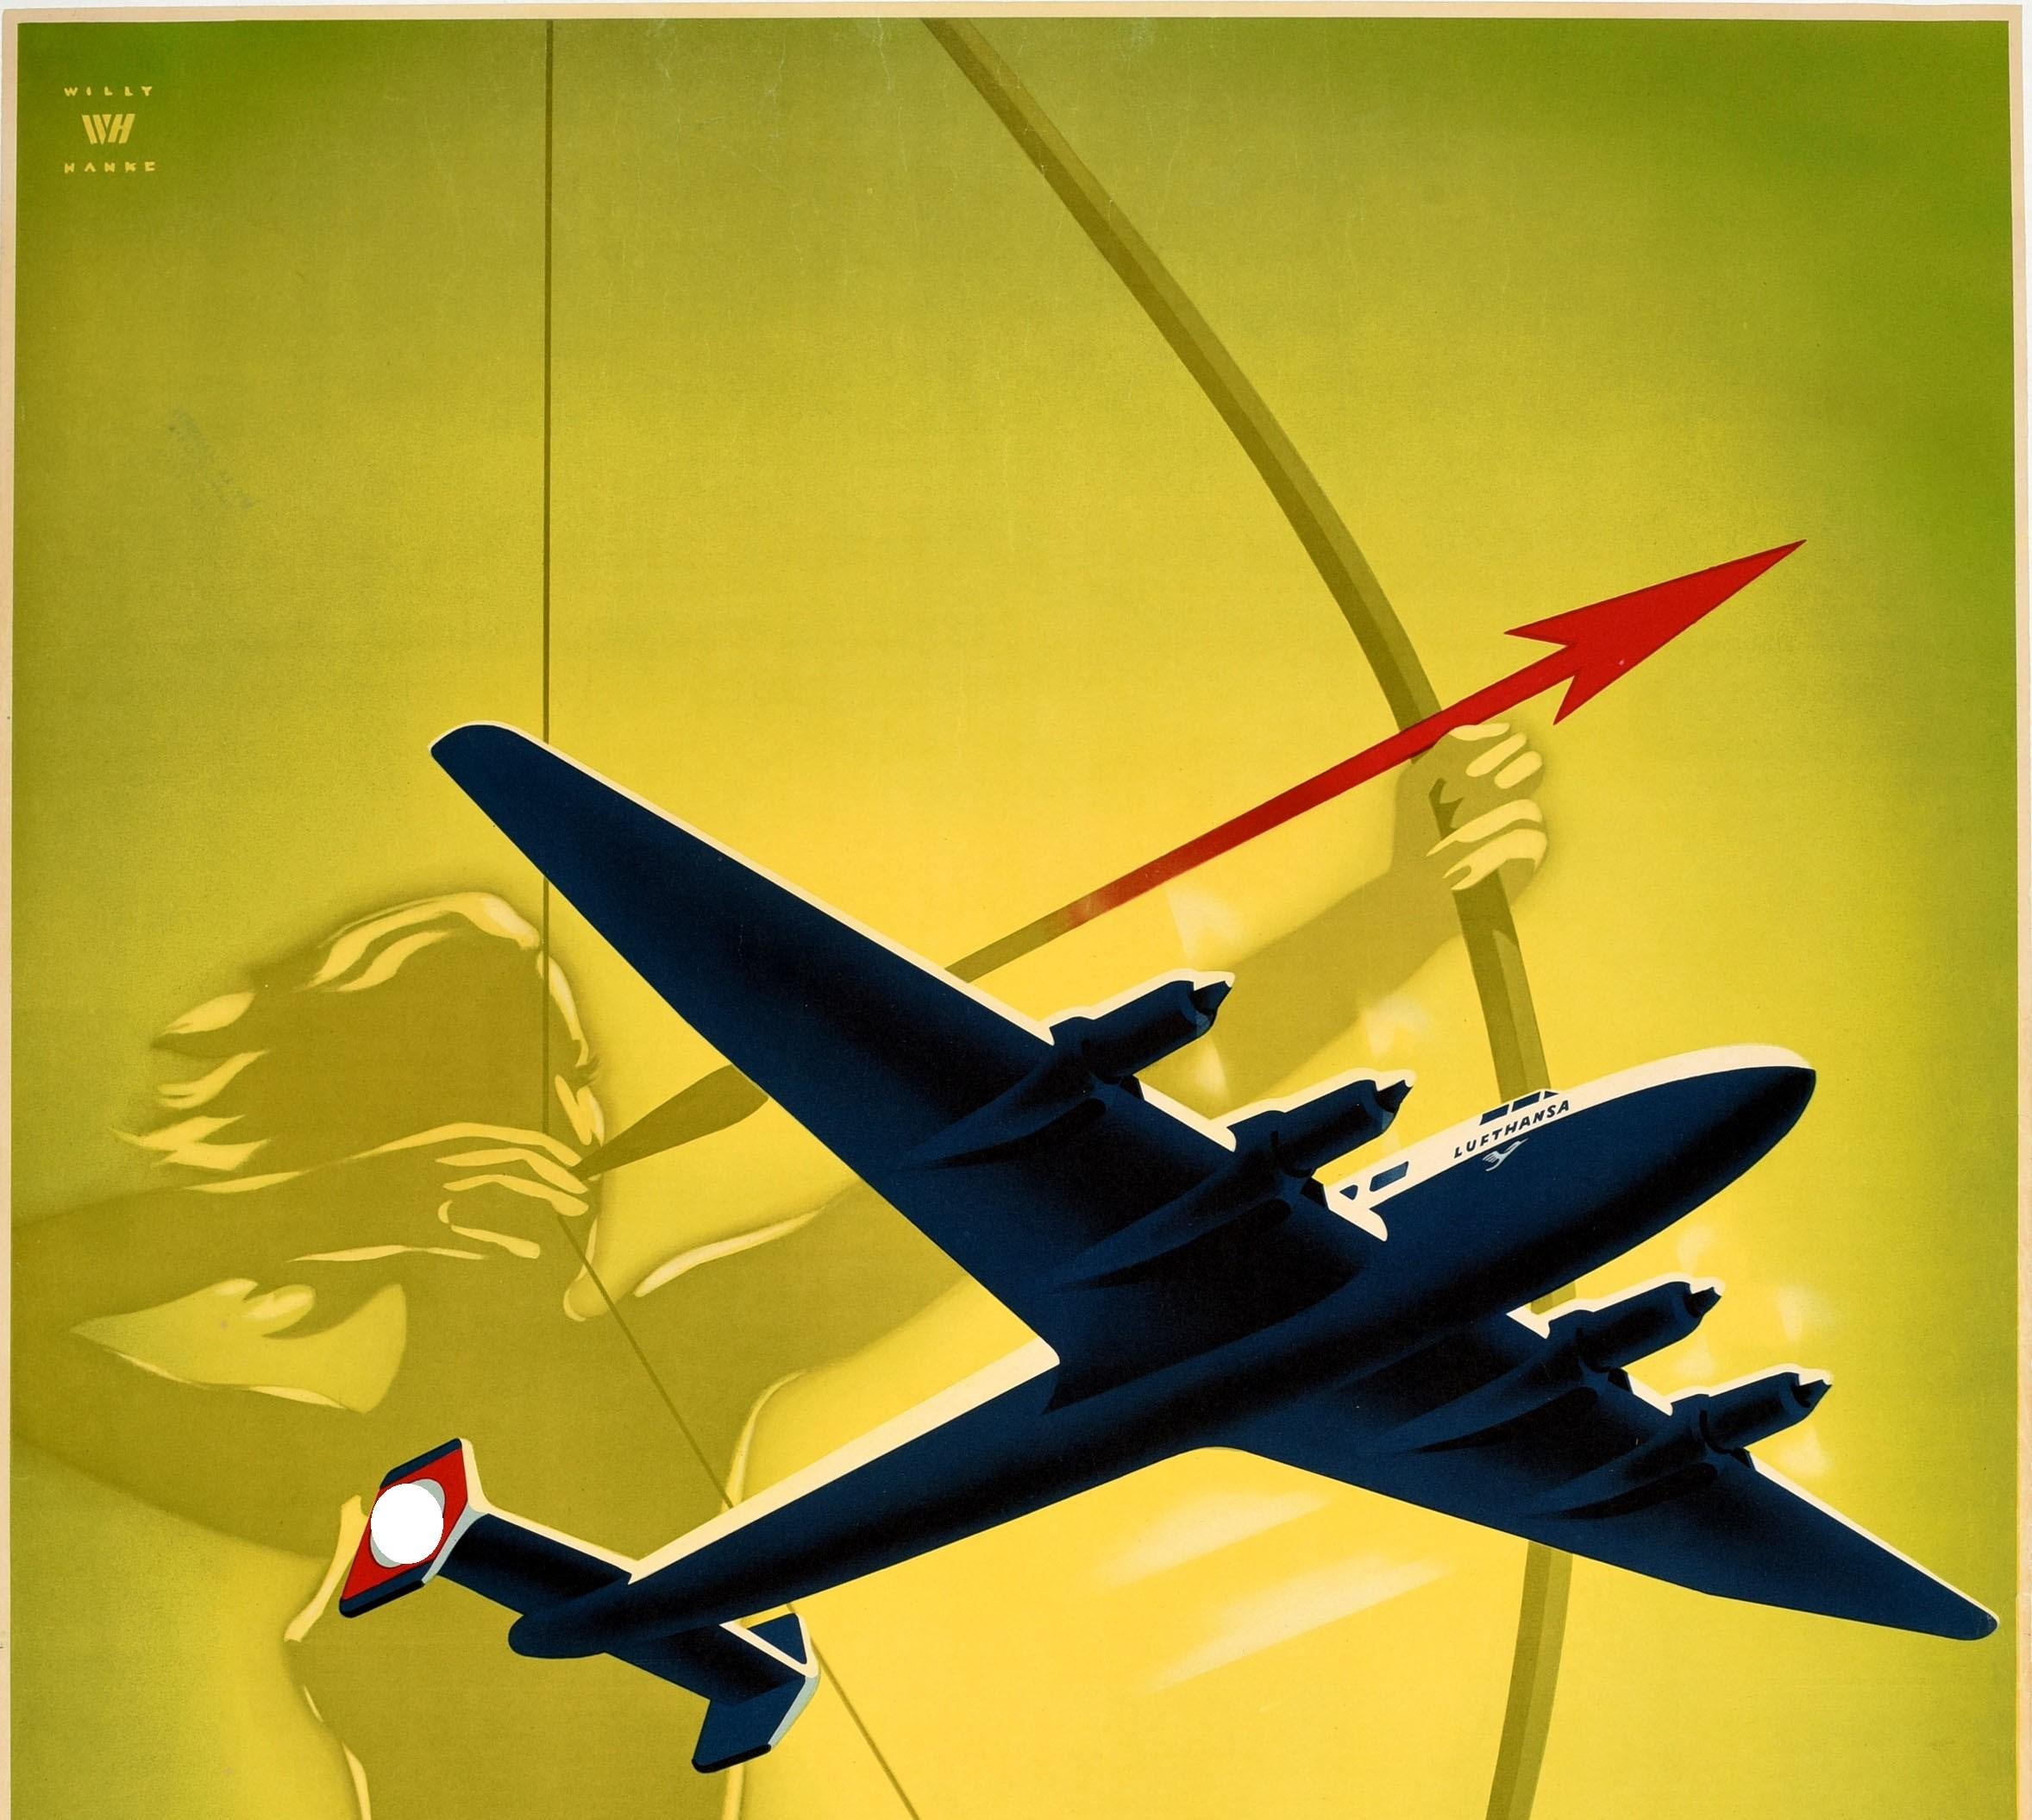 Original Vintage Travel Poster Deutsche Lufthansa Fast To The Goal Arrow Design - Print by Willy Hanke